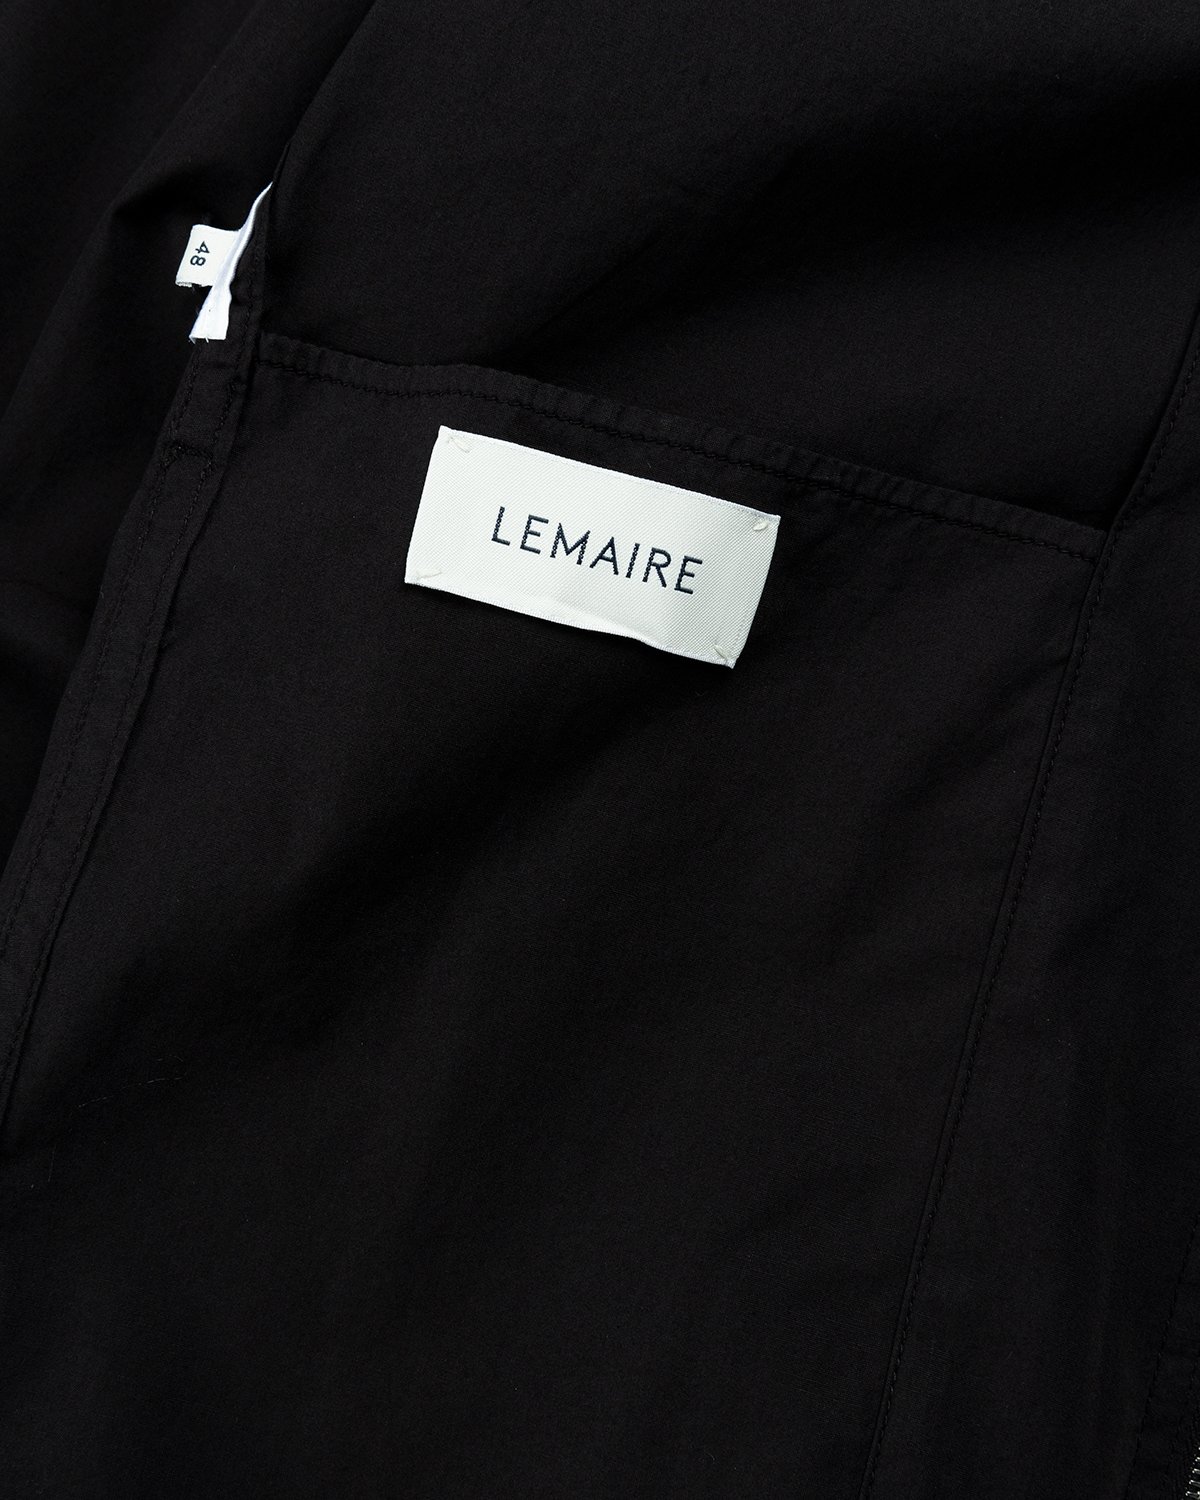 Lemaire - Shirt Blouson Black - Clothing - Black - Image 6